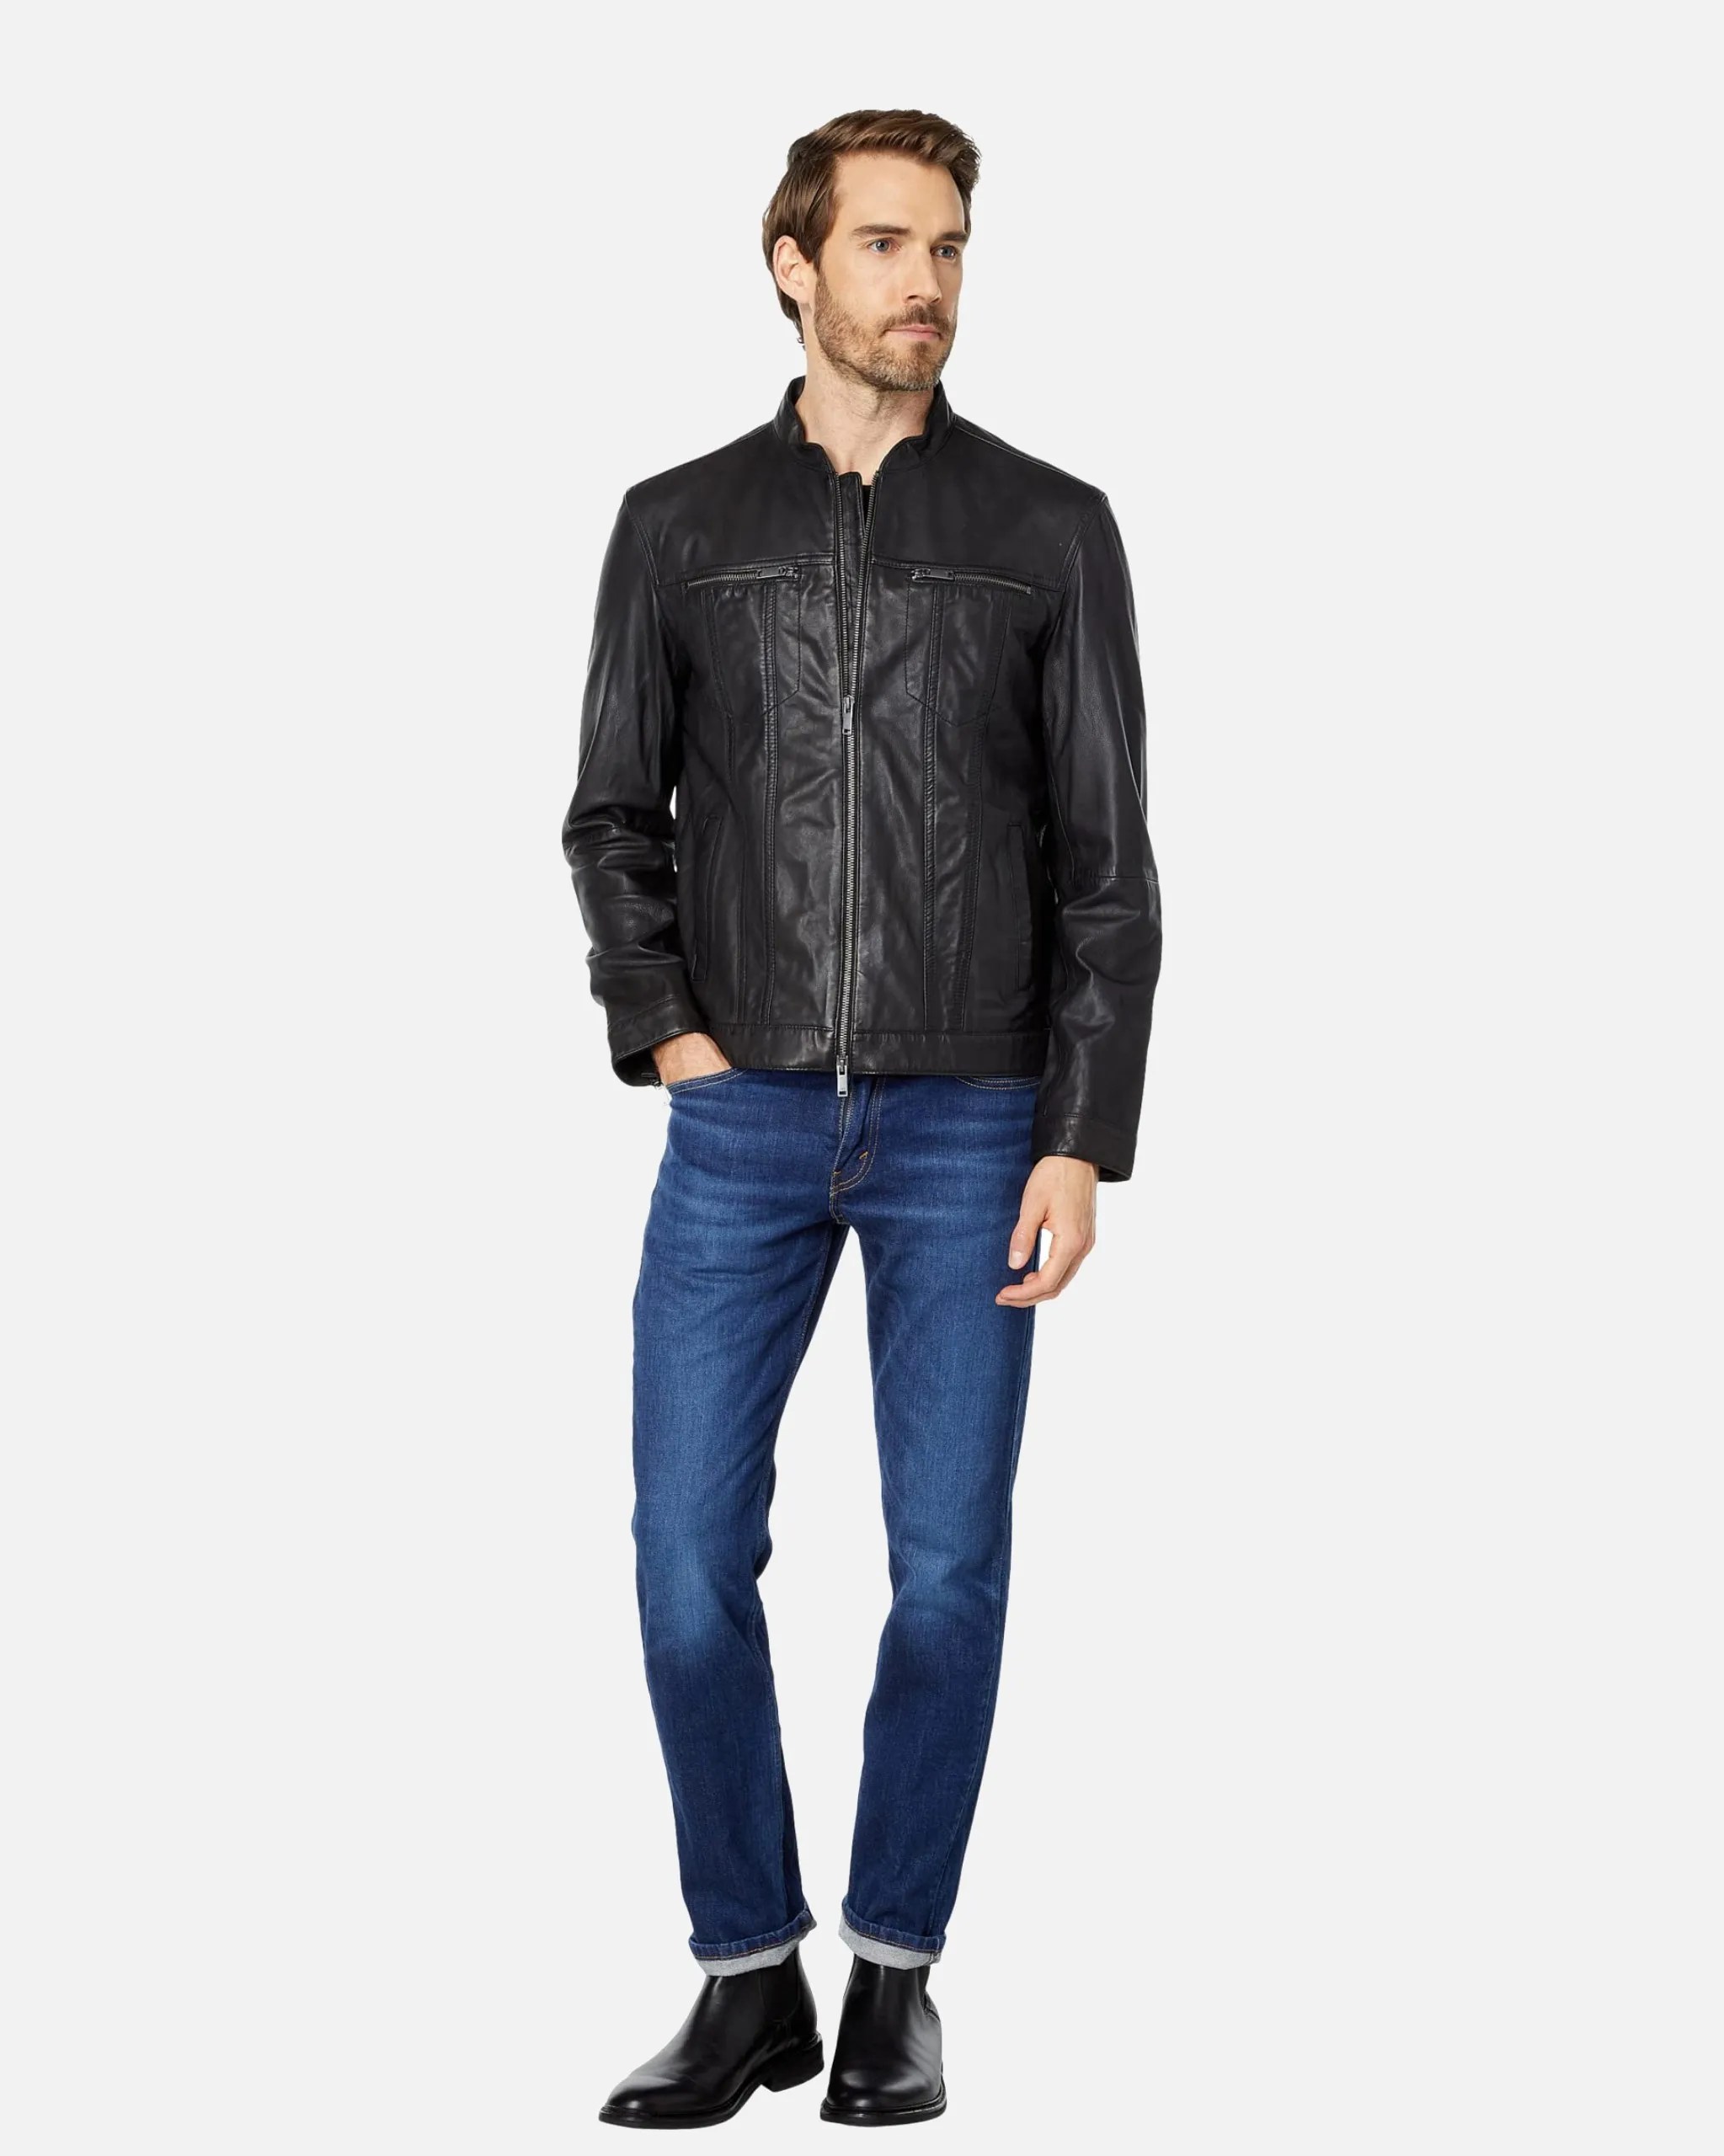 band-collar-racer-jacket-100-genuine-lambskin-leather (4)